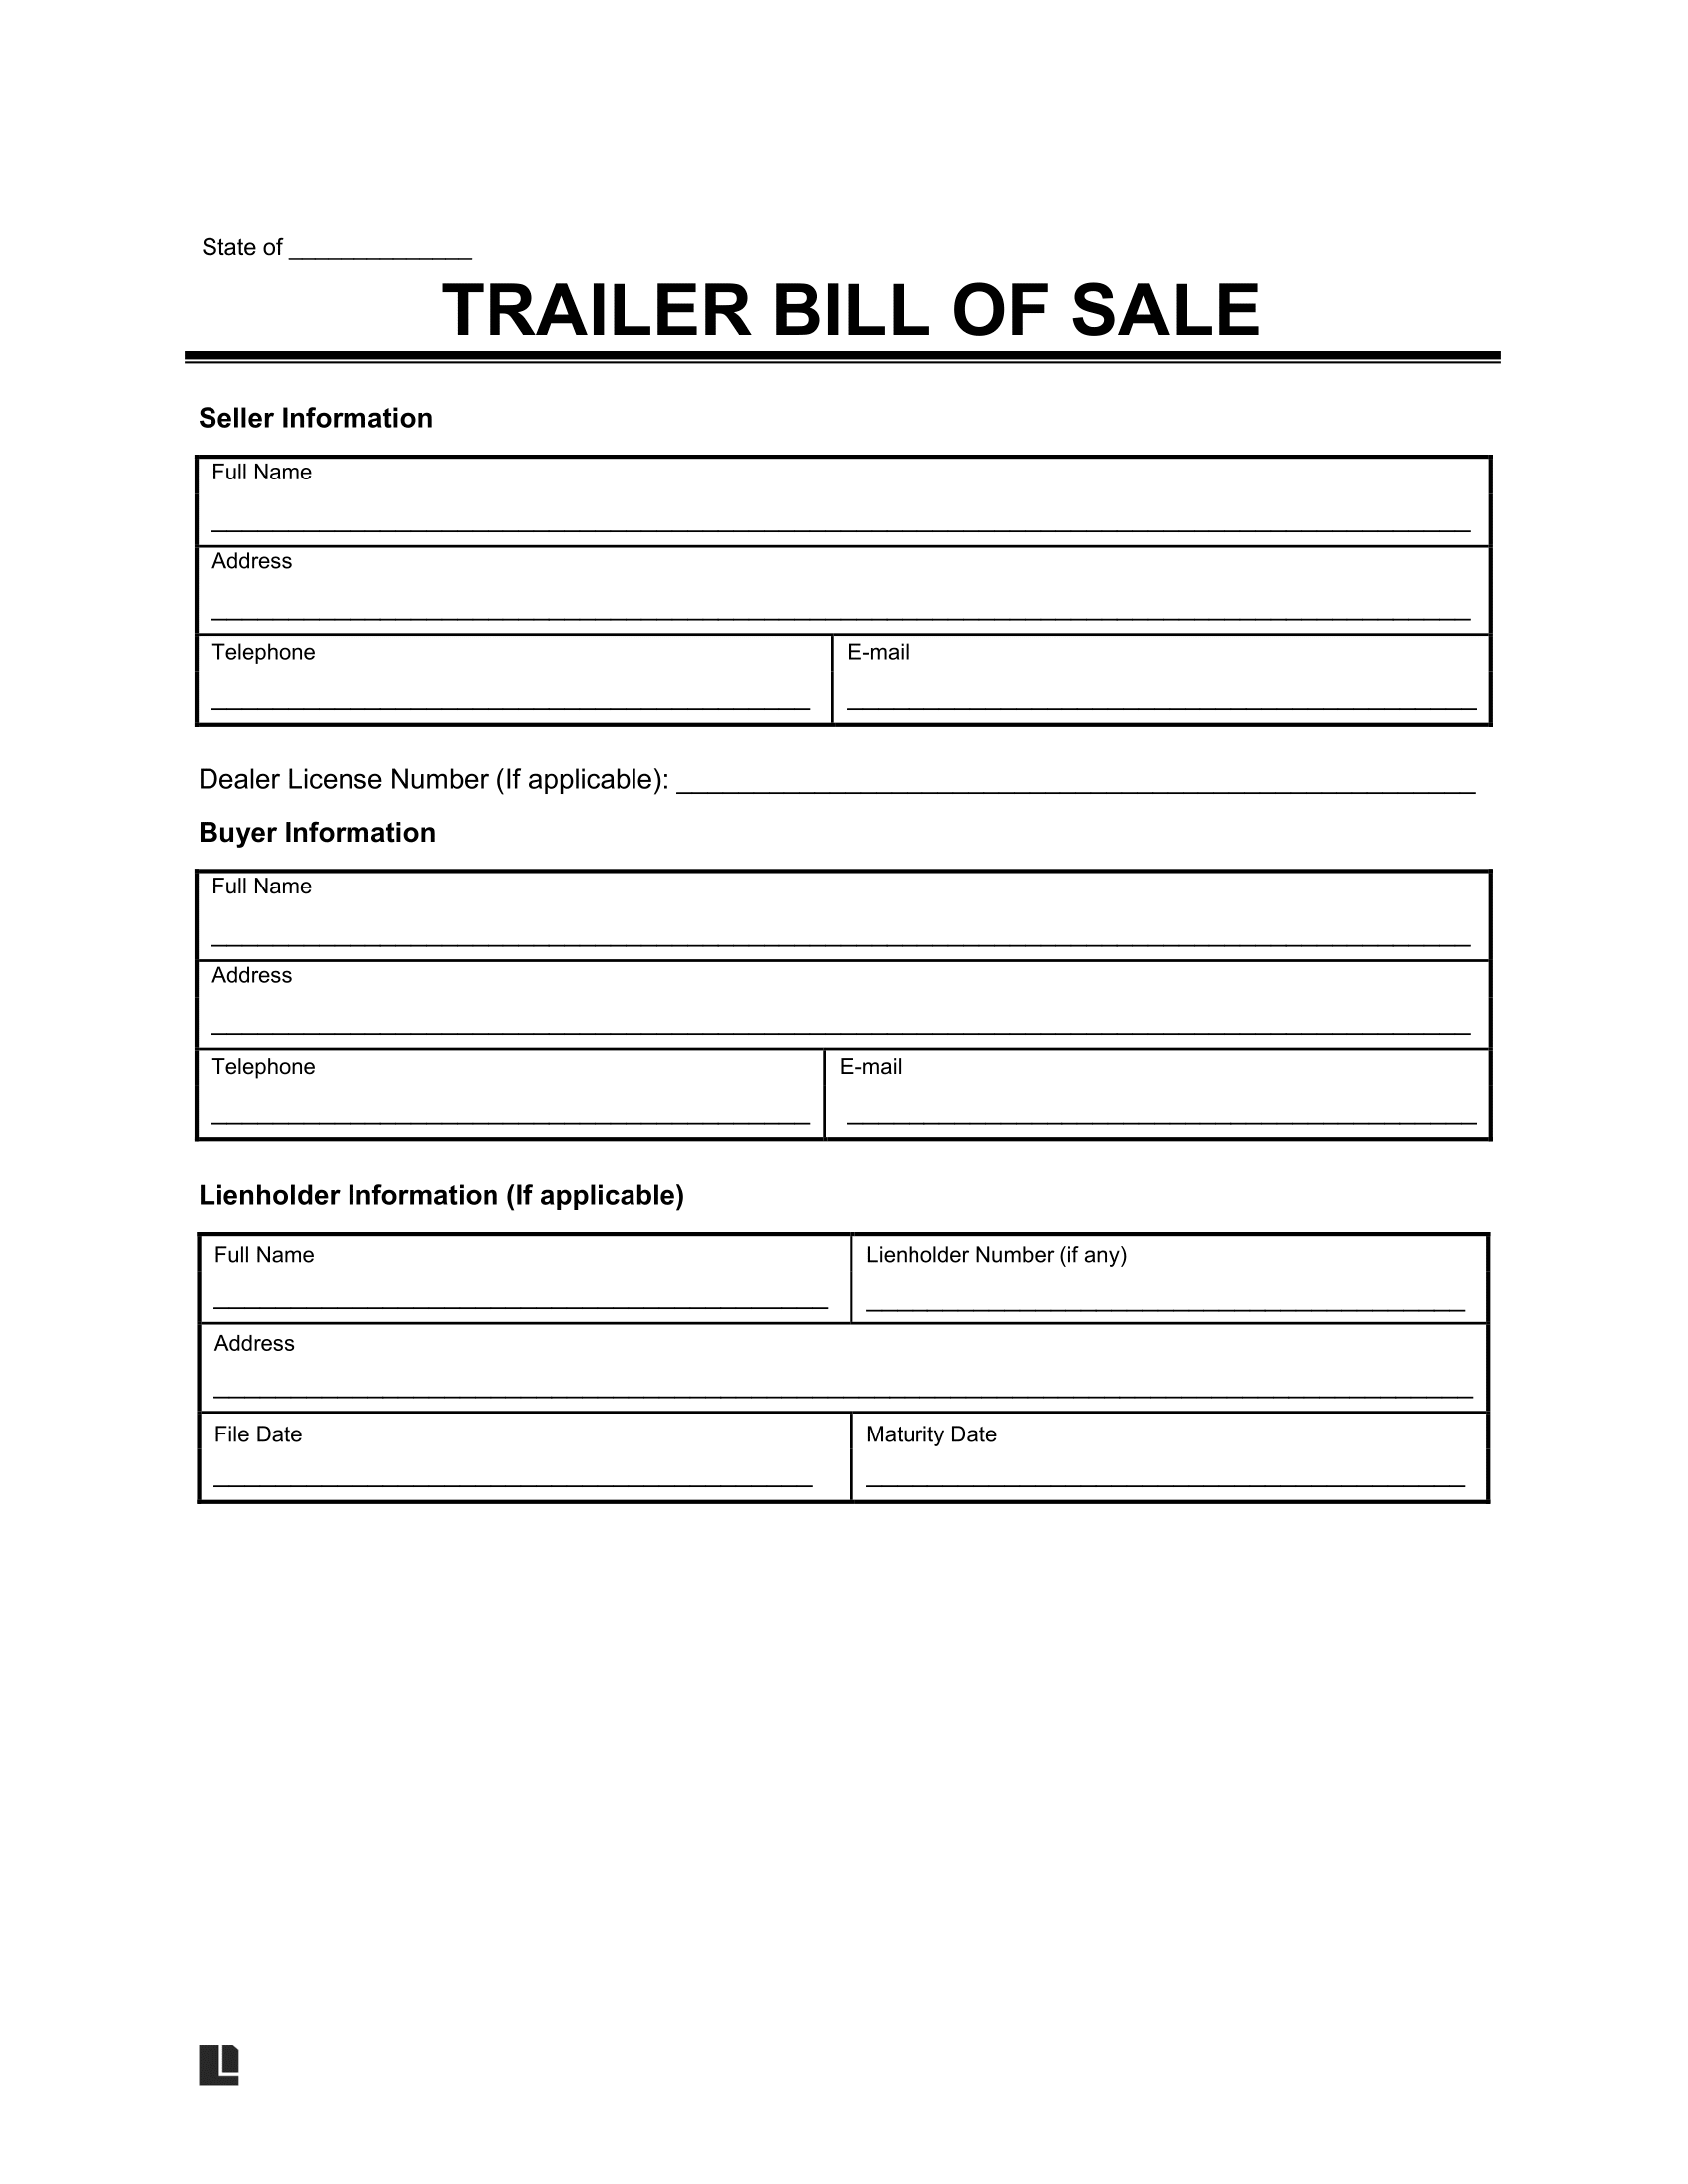 Trailer Bill of Sale form